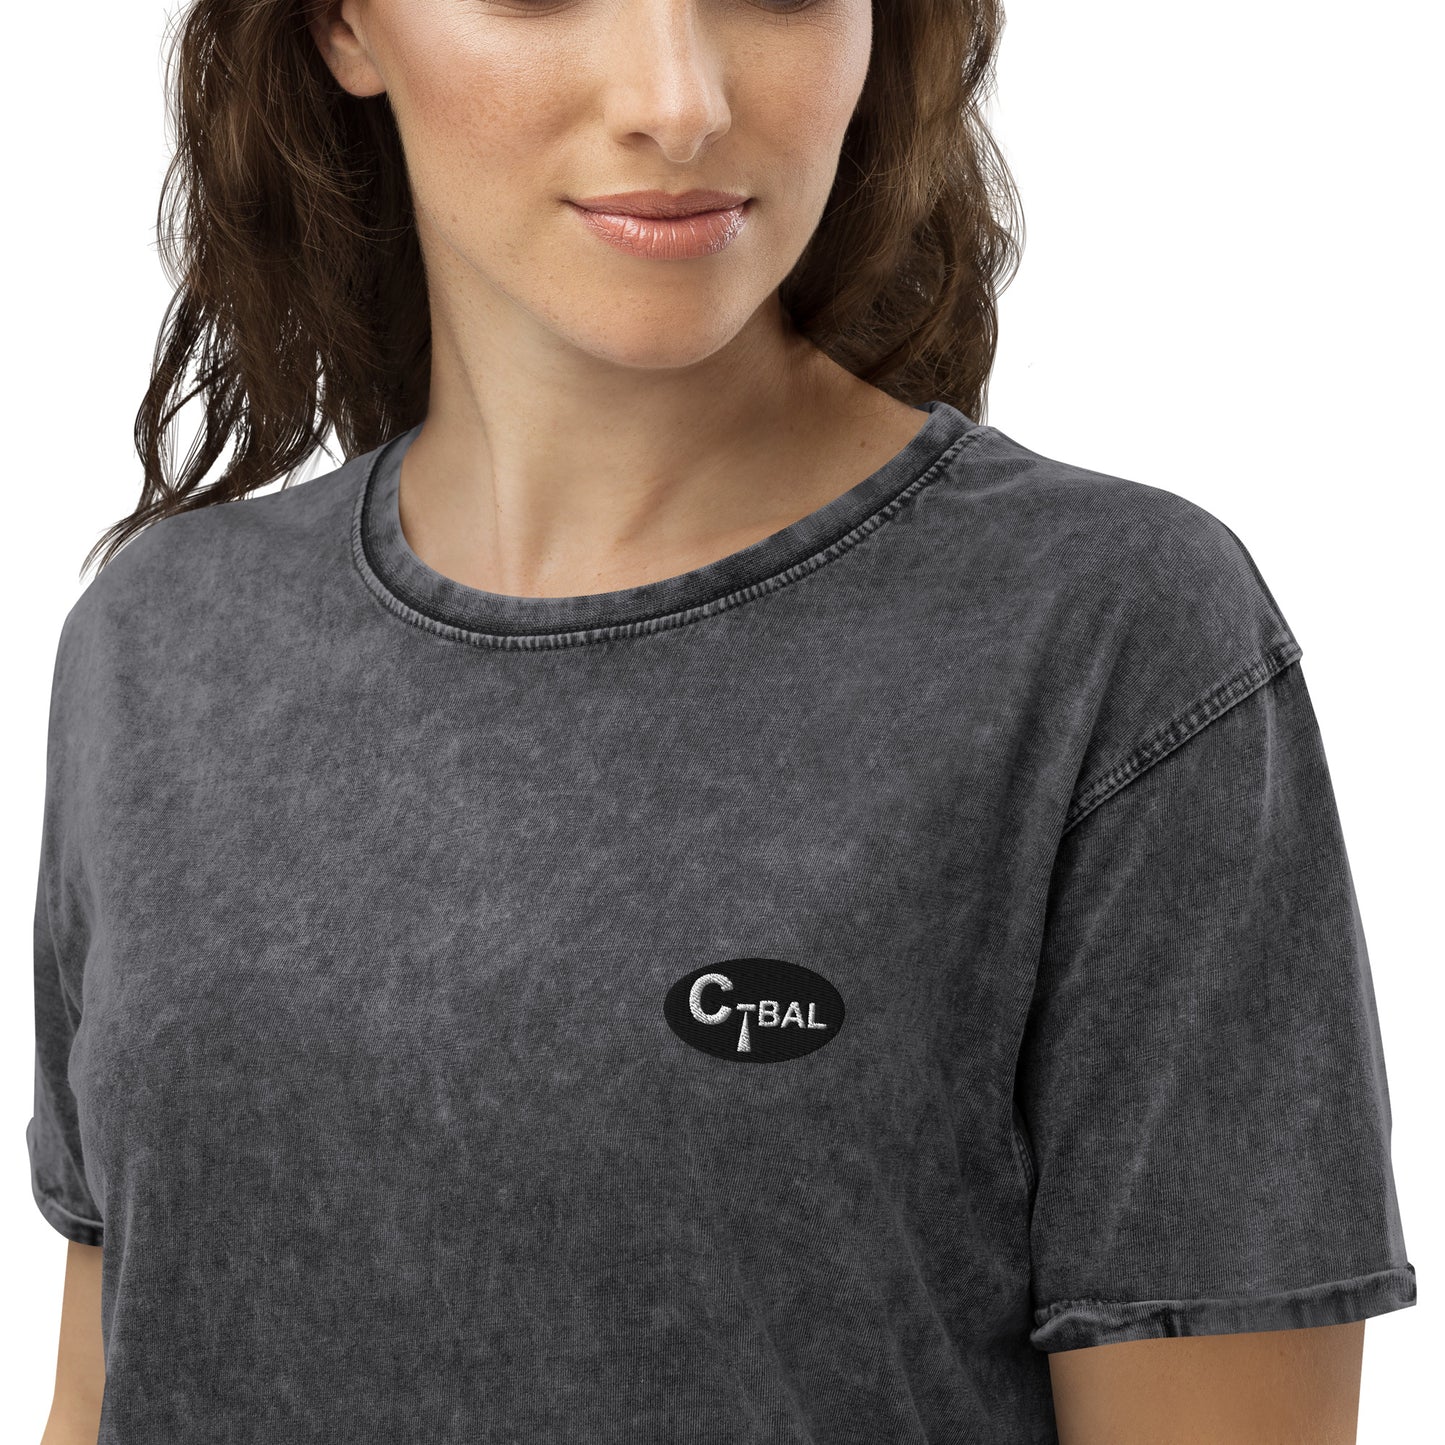 B004 - Denim T-shirt (C-BAL : Black / Embroidery Logo)